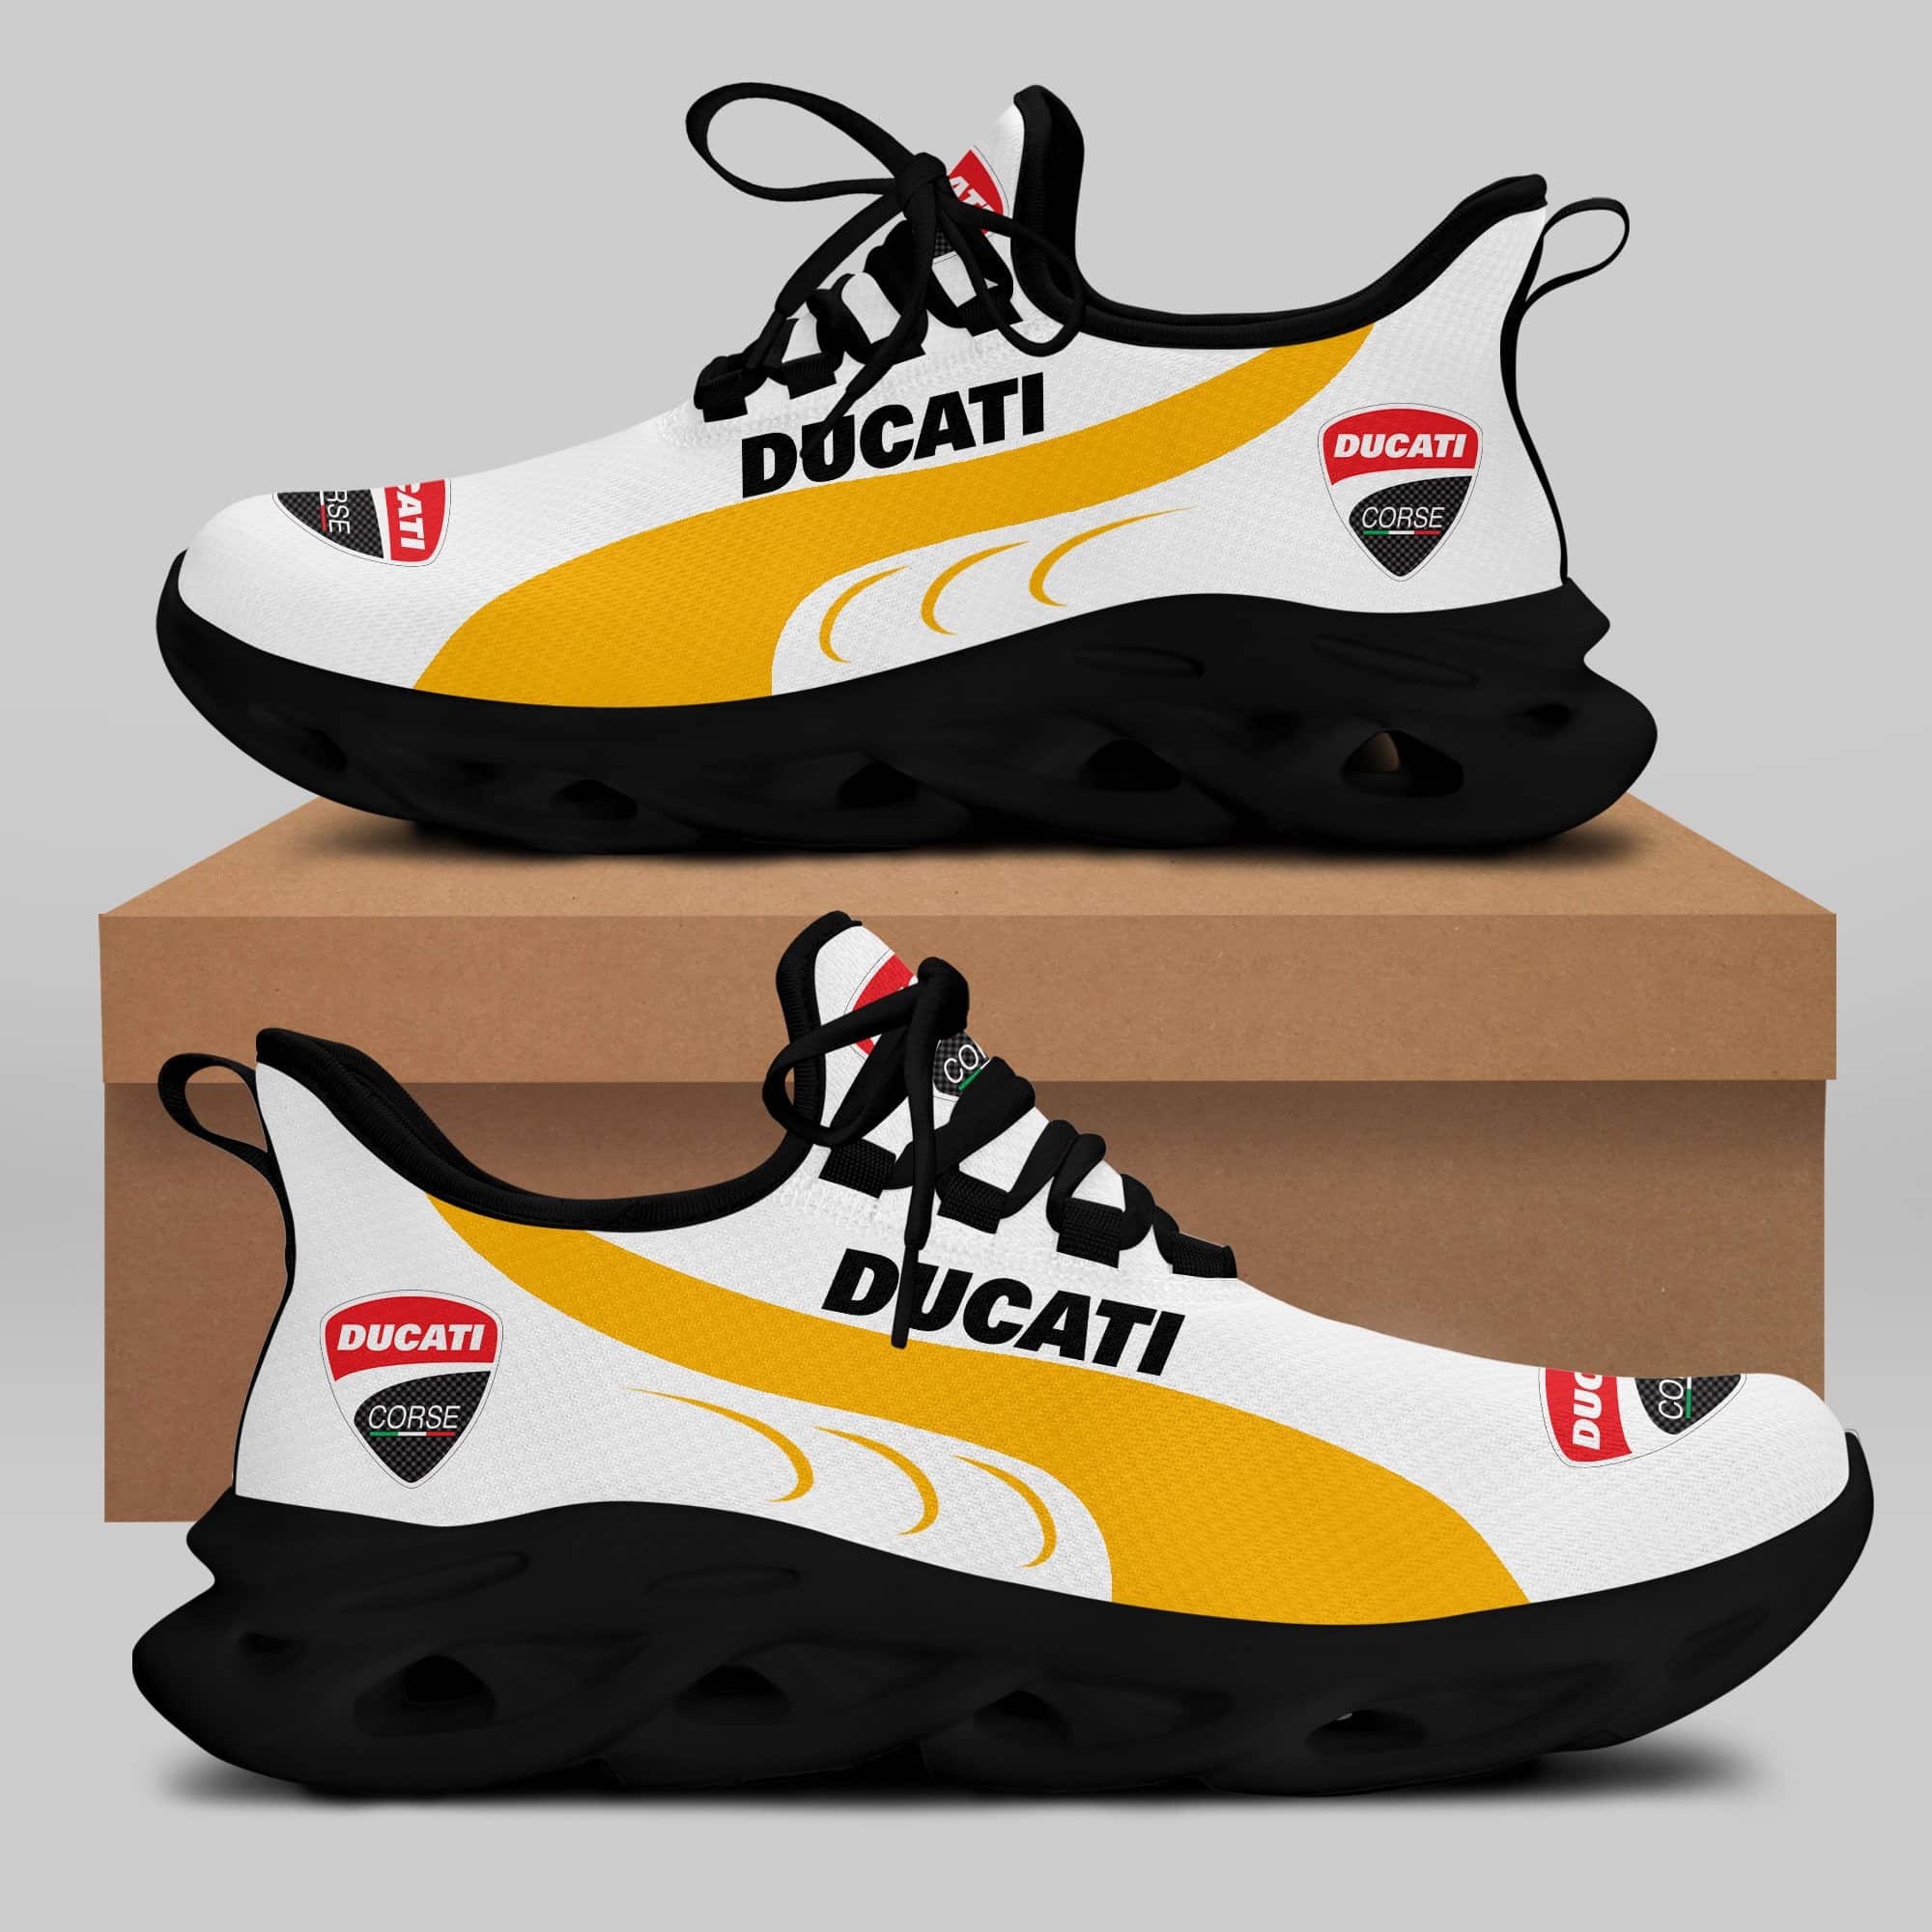 Ducati Racing Running Shoes Max Soul Shoes Sneakers Ver 64 2